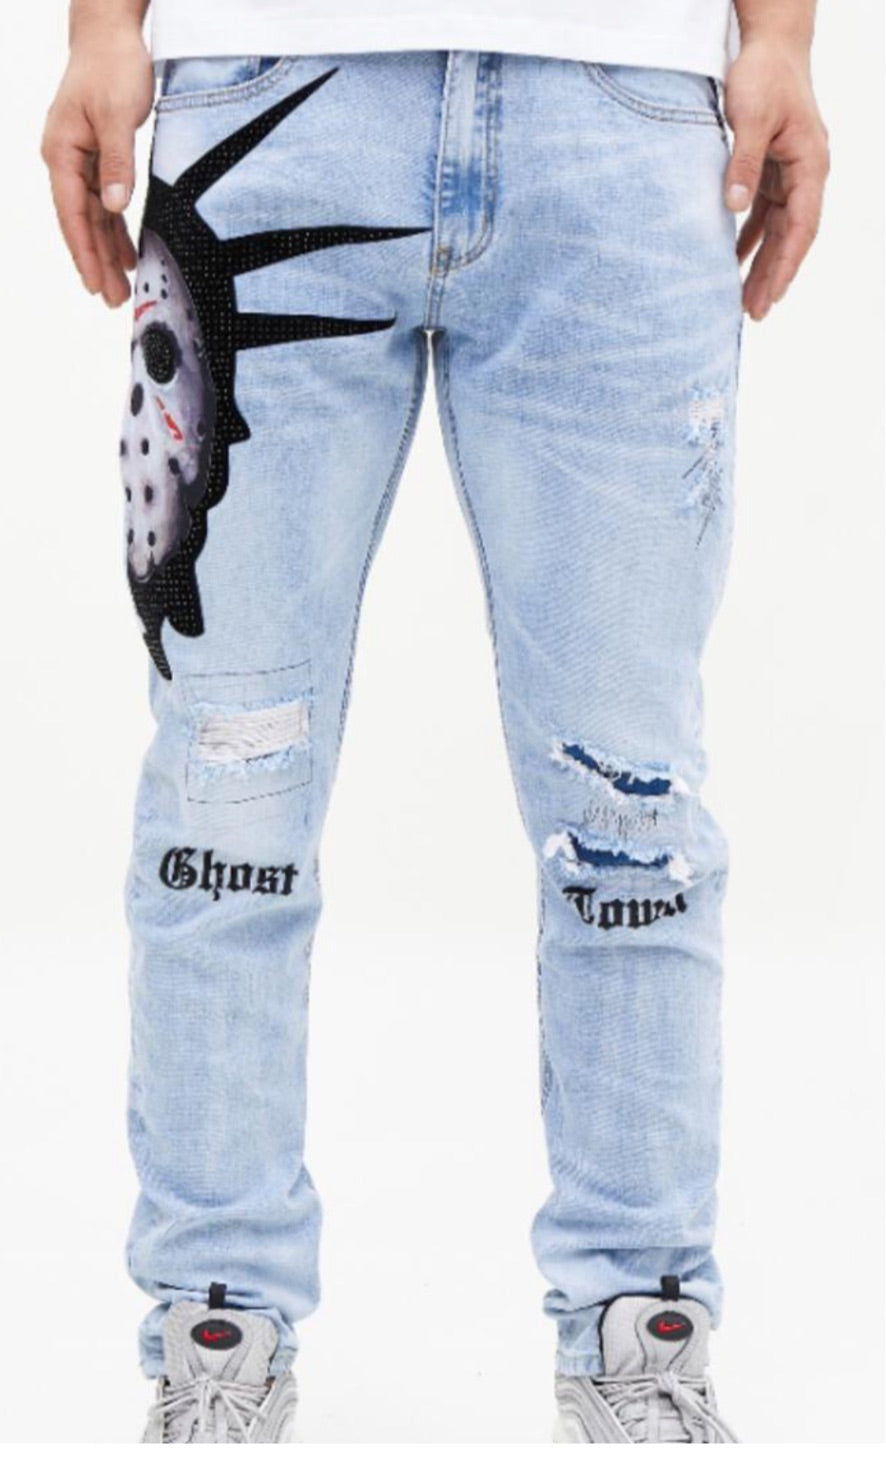 Roku Men’s Rhinestone Denim Jeans Pants